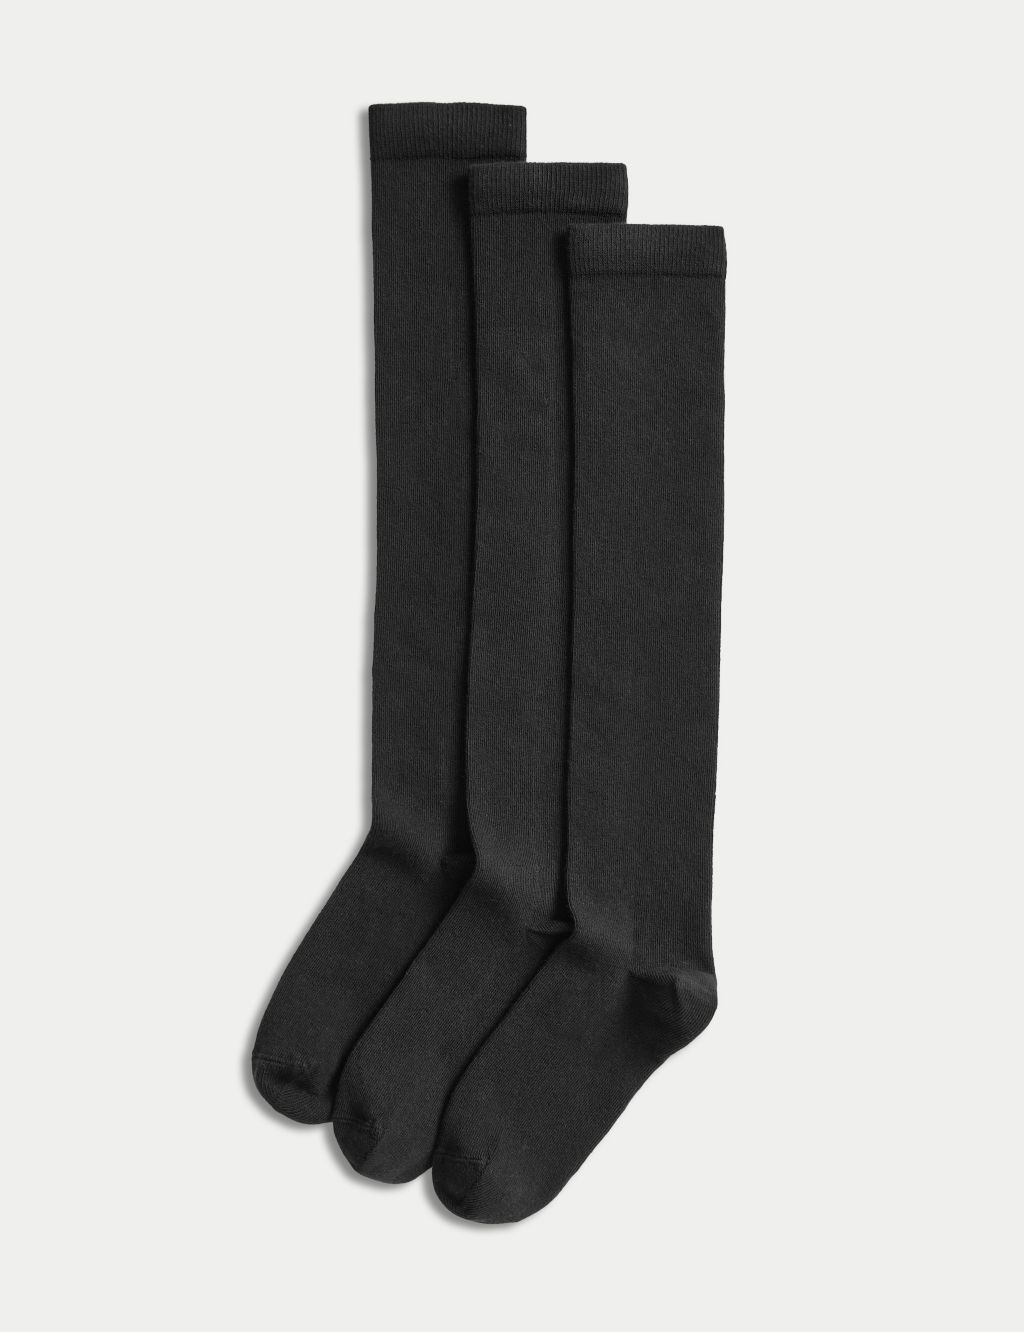 Black Lace Boot Socks, Knee High Socks, Cotton Thigh High Socks, Over the Knee  Socks, Lace Long Socks 